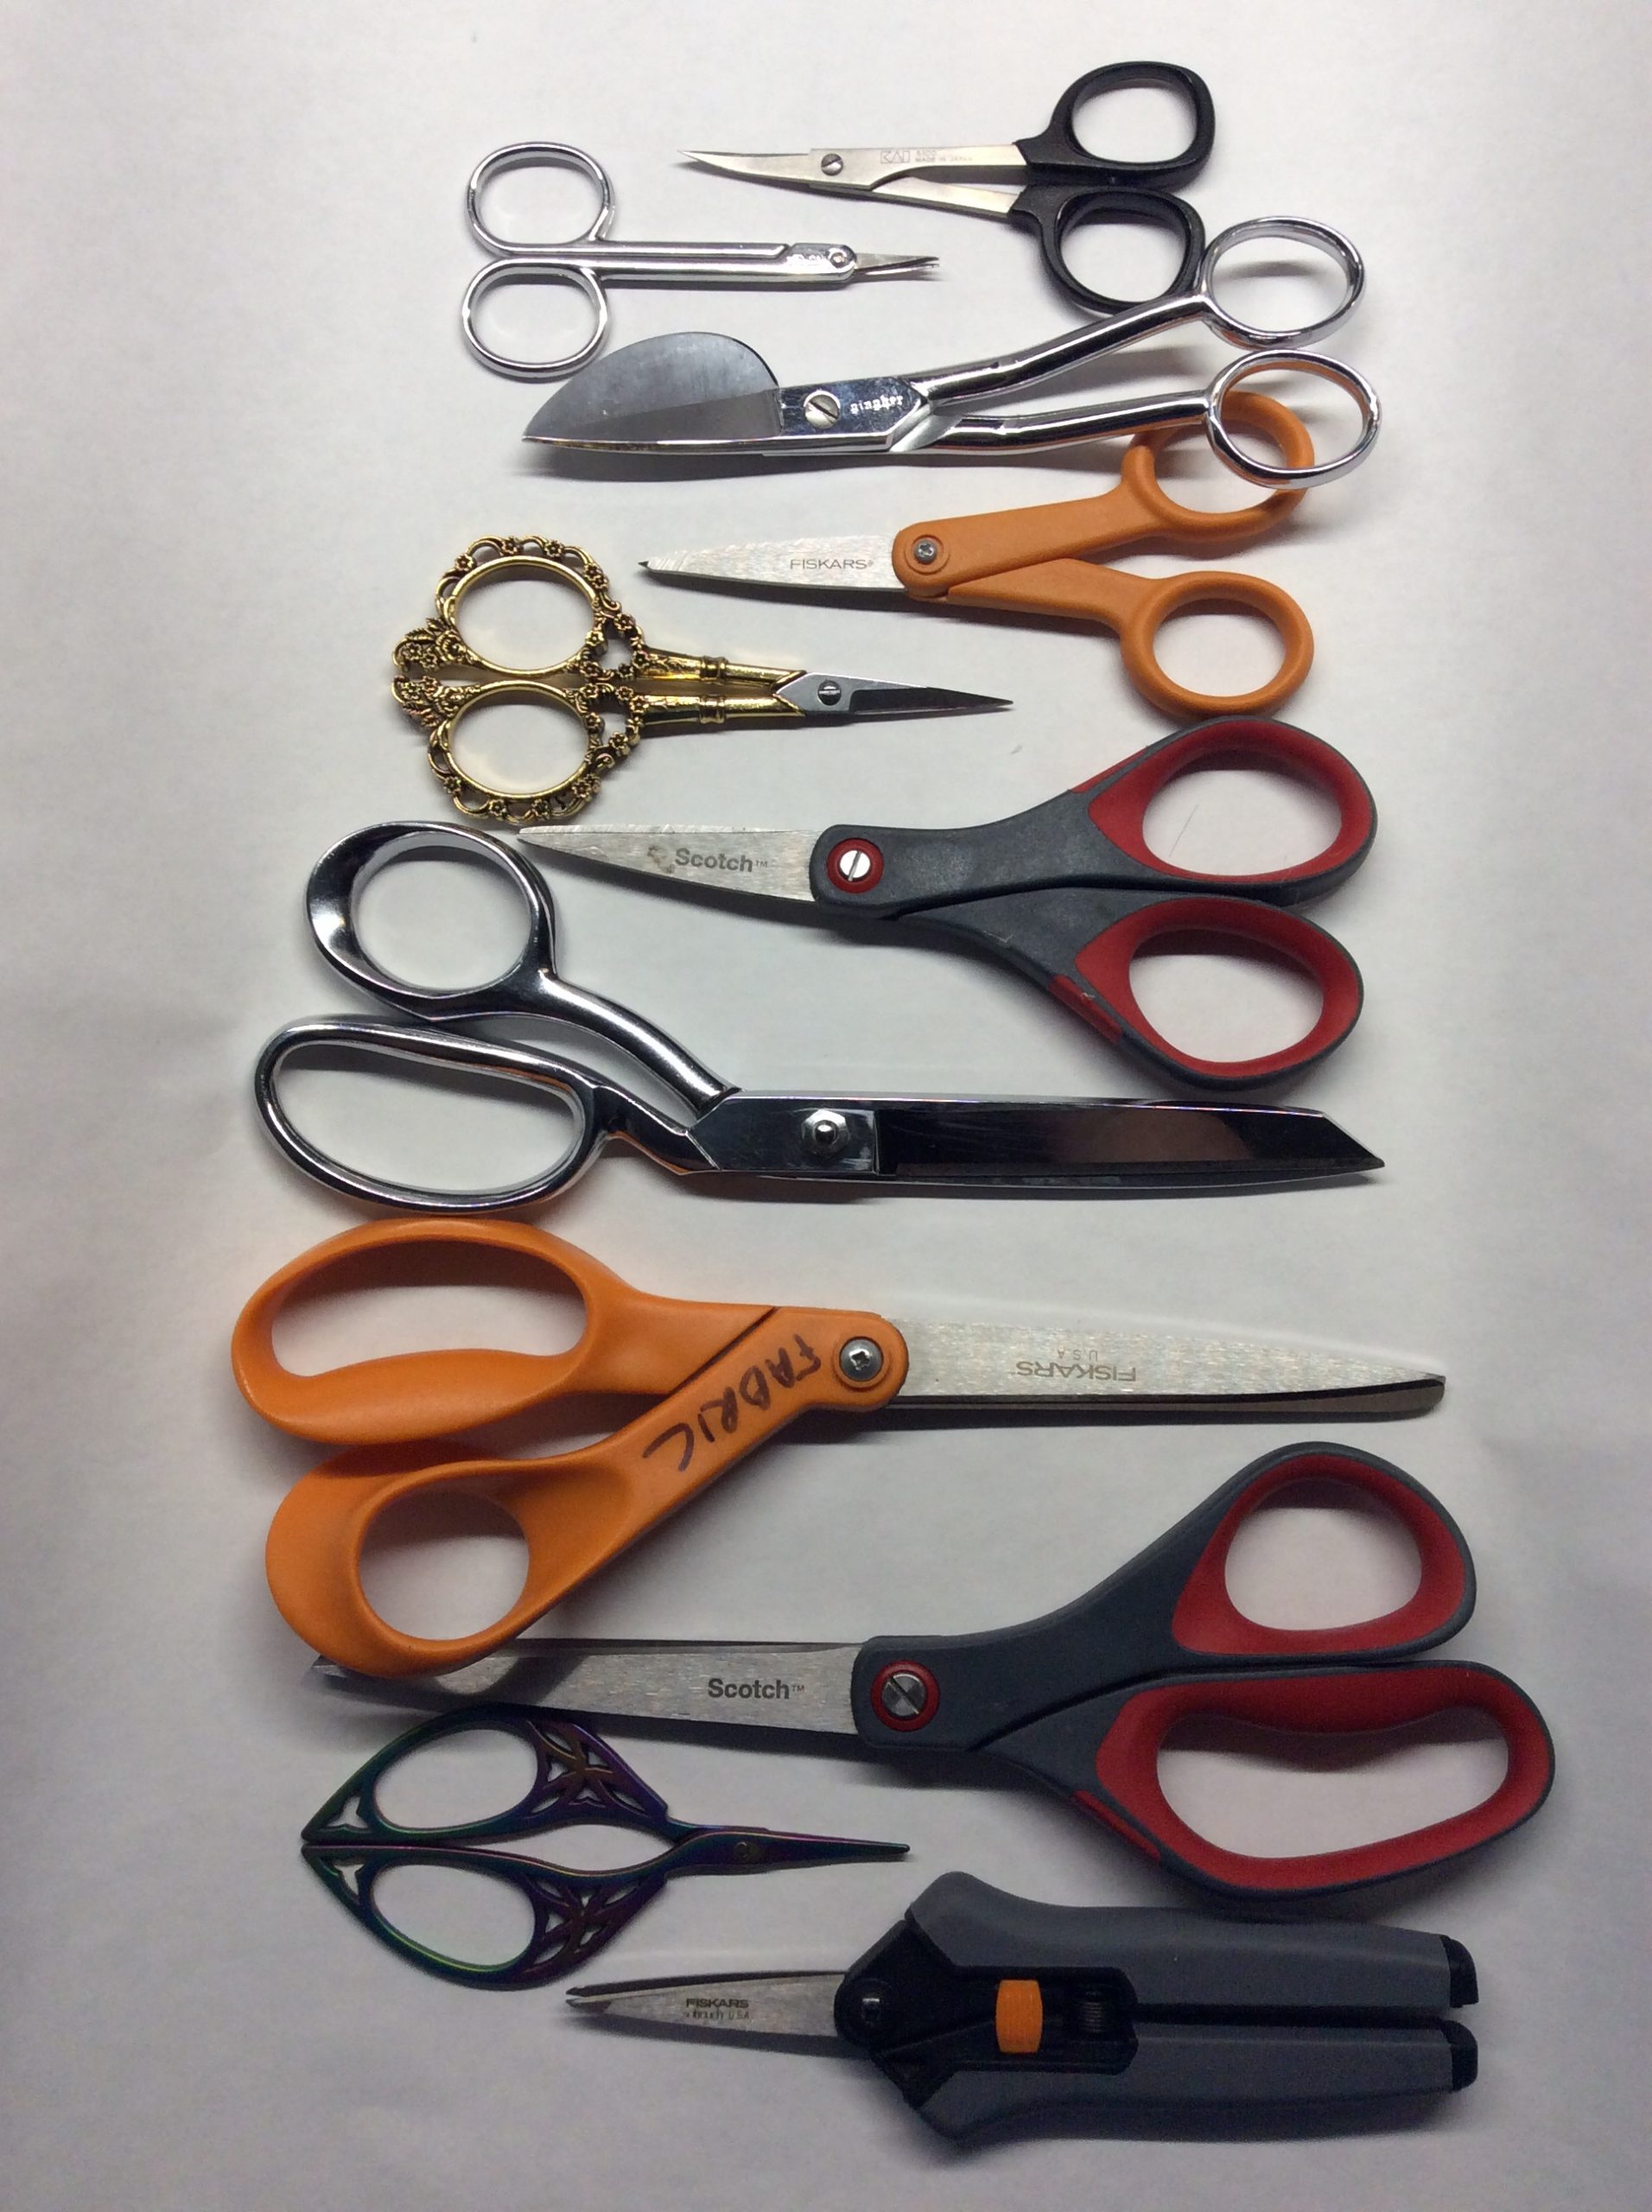 Scissors from my worktable